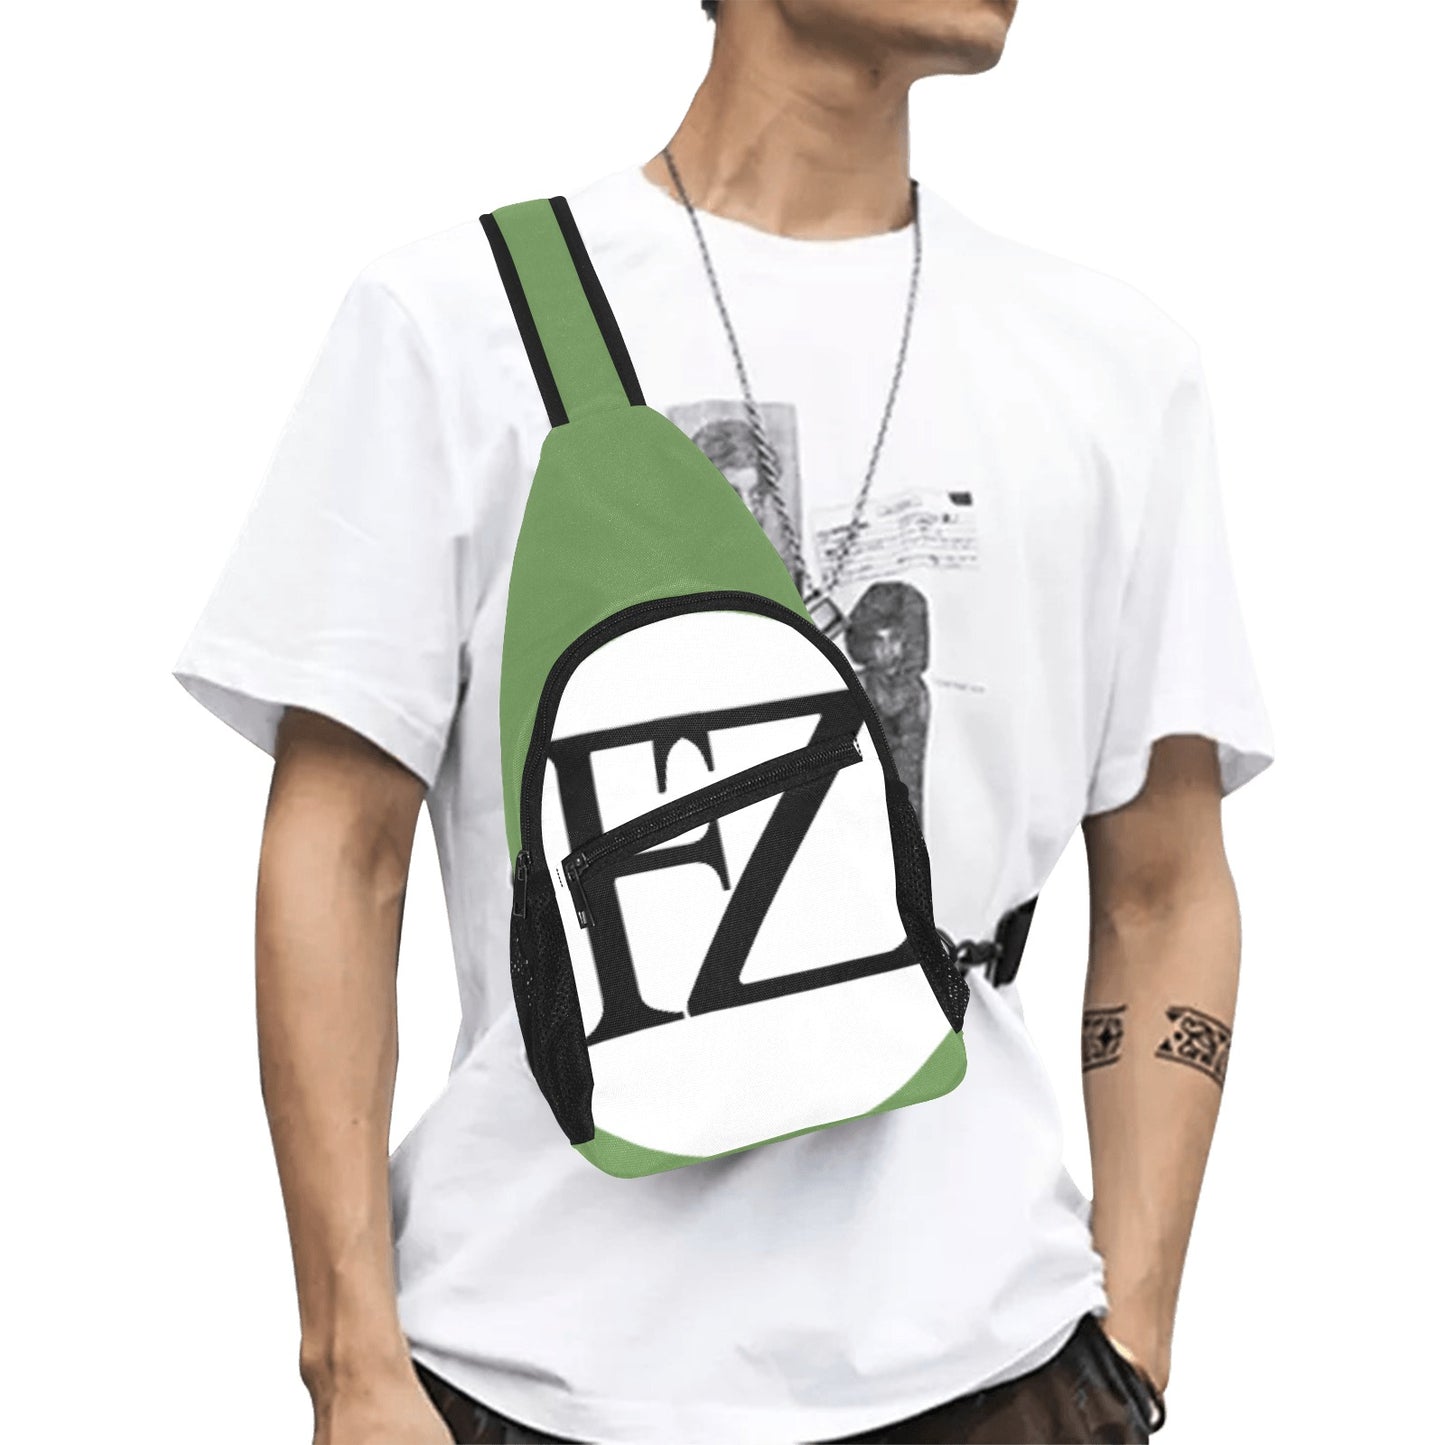 fz men's chest bag too one size / fz men's chest bag too-green all over print chest bag(model1719)